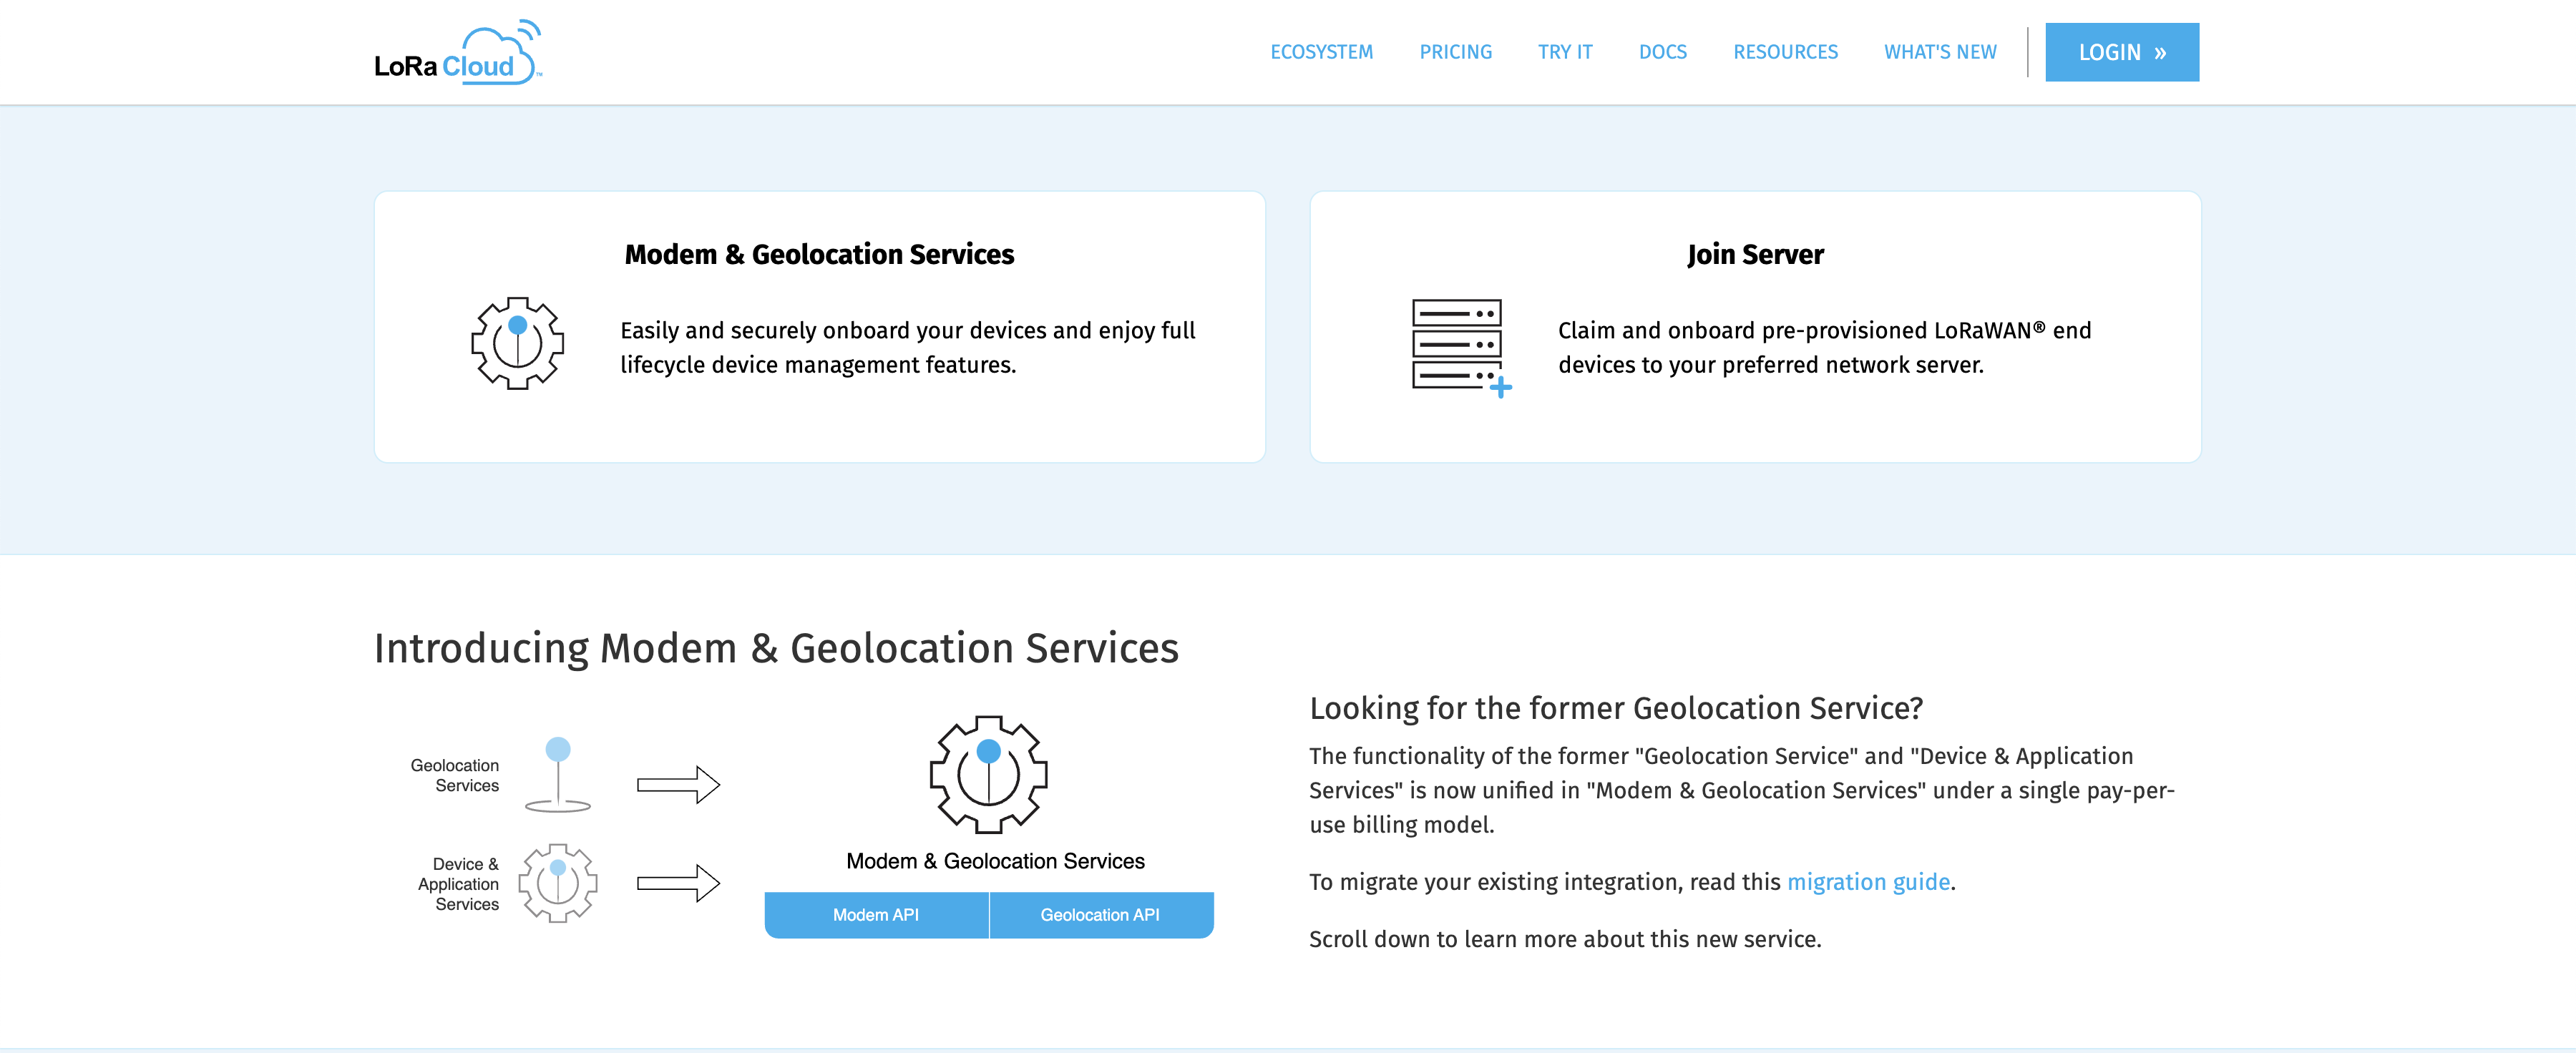 LoRa Cloud Modem & Geolocation Services